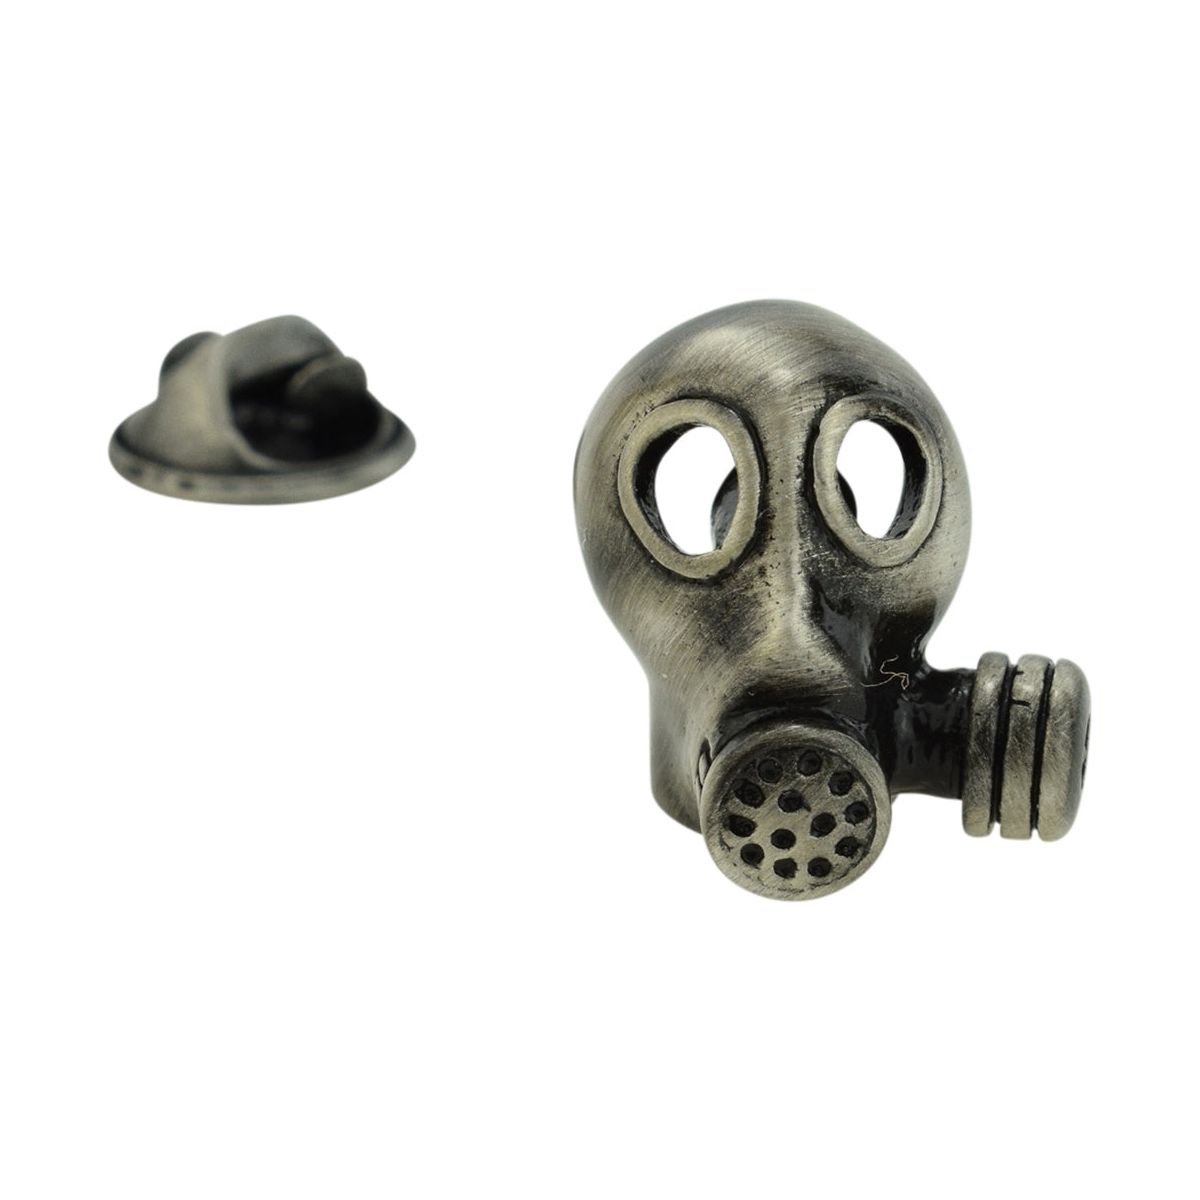 Antique Finish Gas Mask Lapel Pin Badge - Ashton and Finch